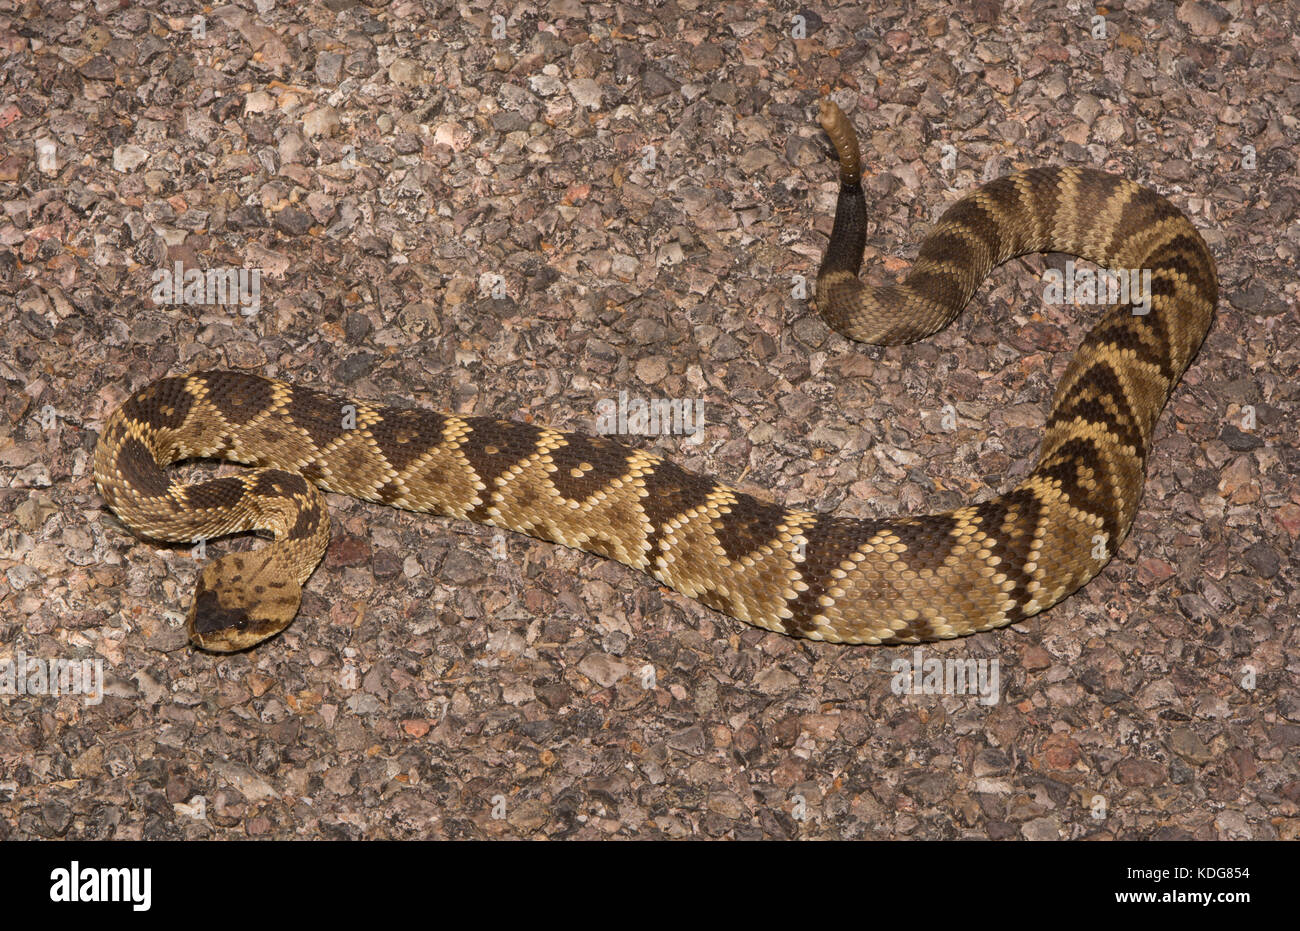 Western black-tailed rattlesnake (crotalus molossus) da cochise county, Arizona, Stati Uniti. Foto Stock